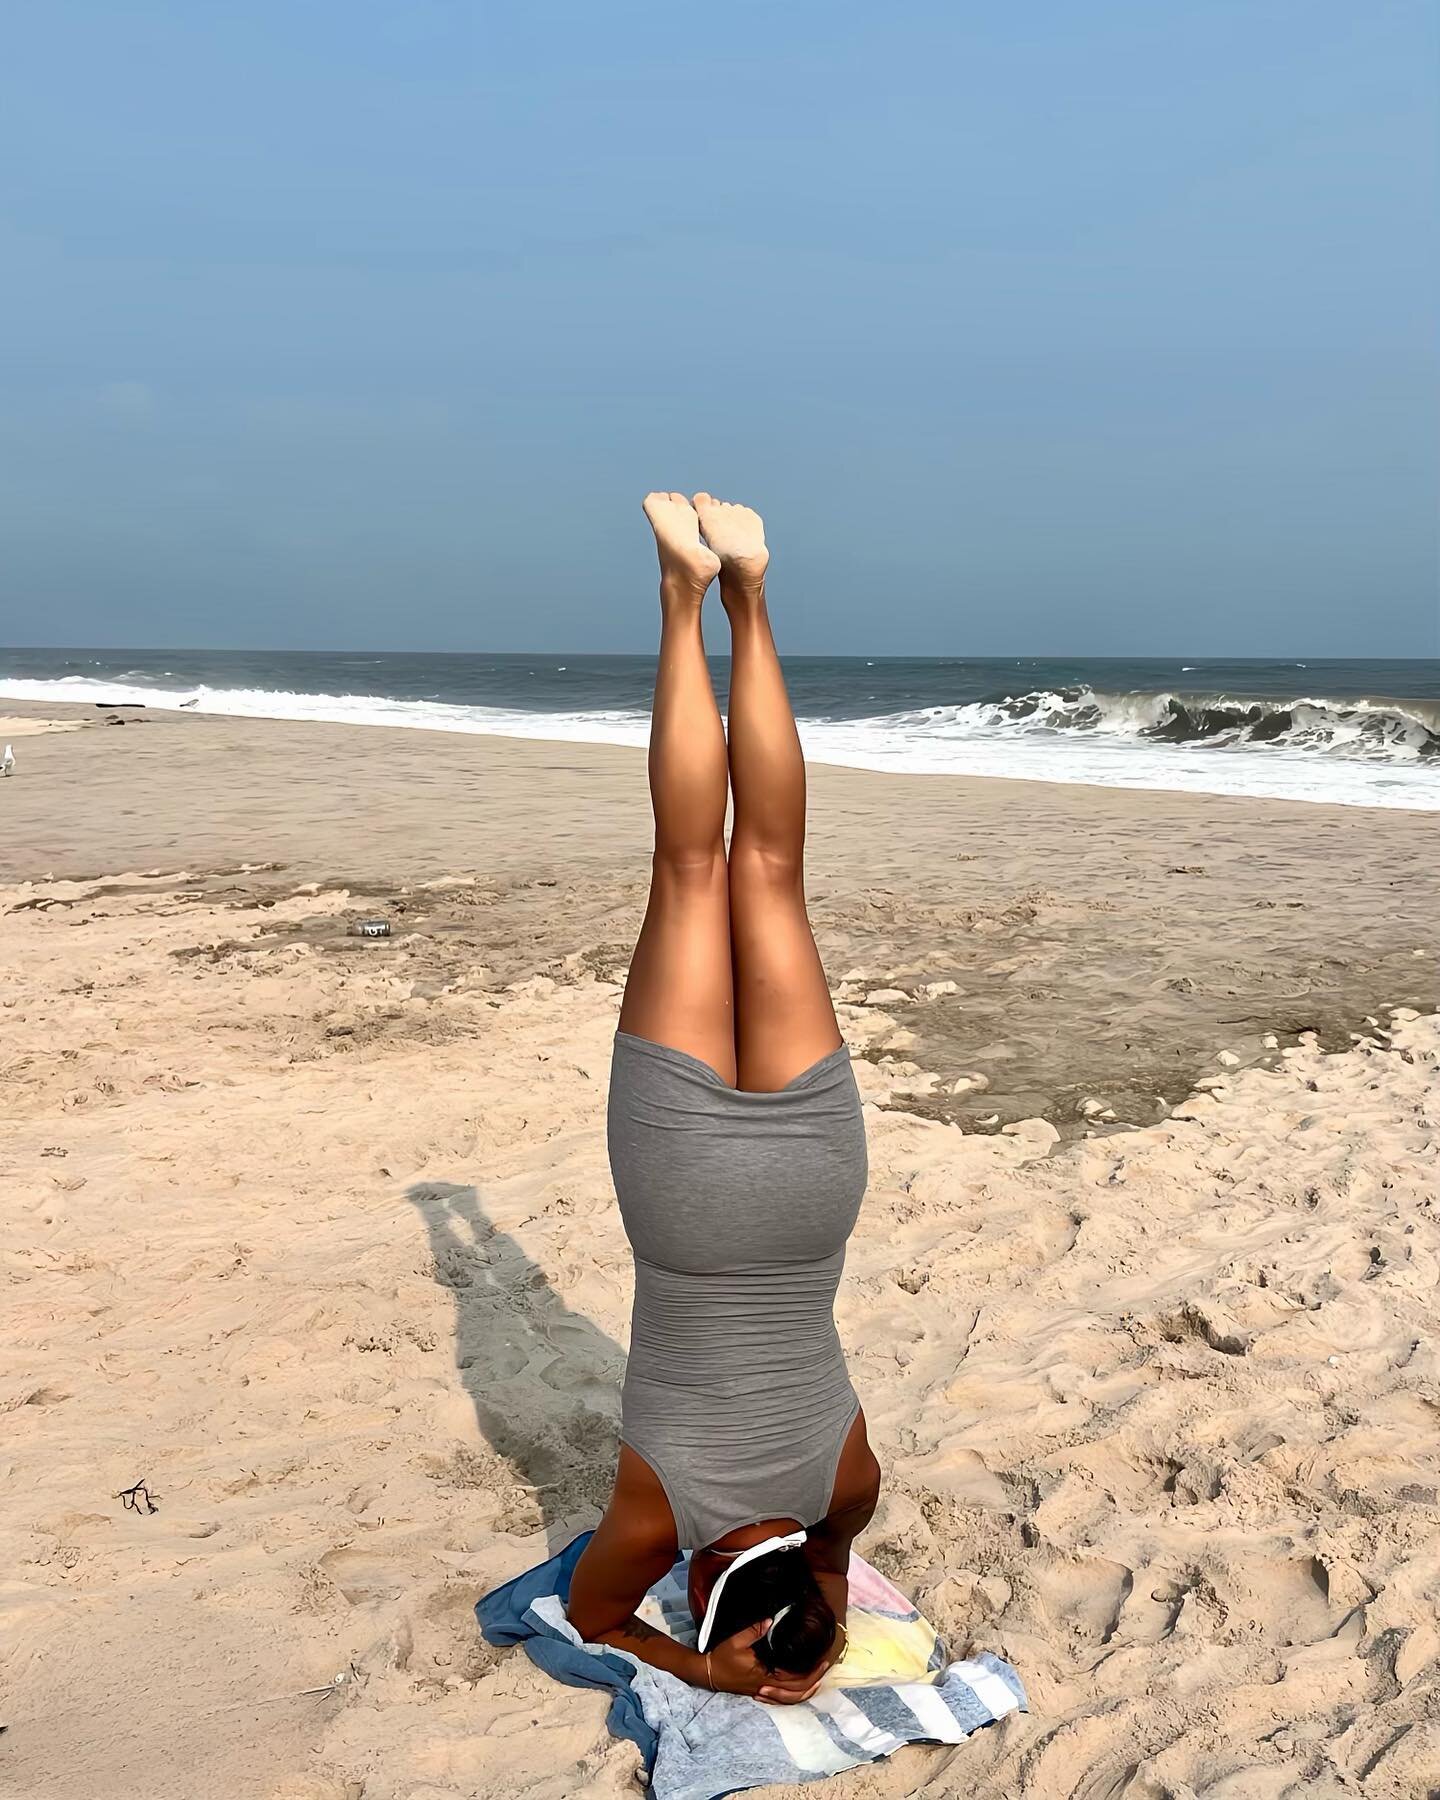 We hope you all are enjoying the sunshine ☀️

@yoganicki 

#yoga #justbreatheyogawellness #yogastudio #businessowner #kismet #skims #handstand #beachvibes